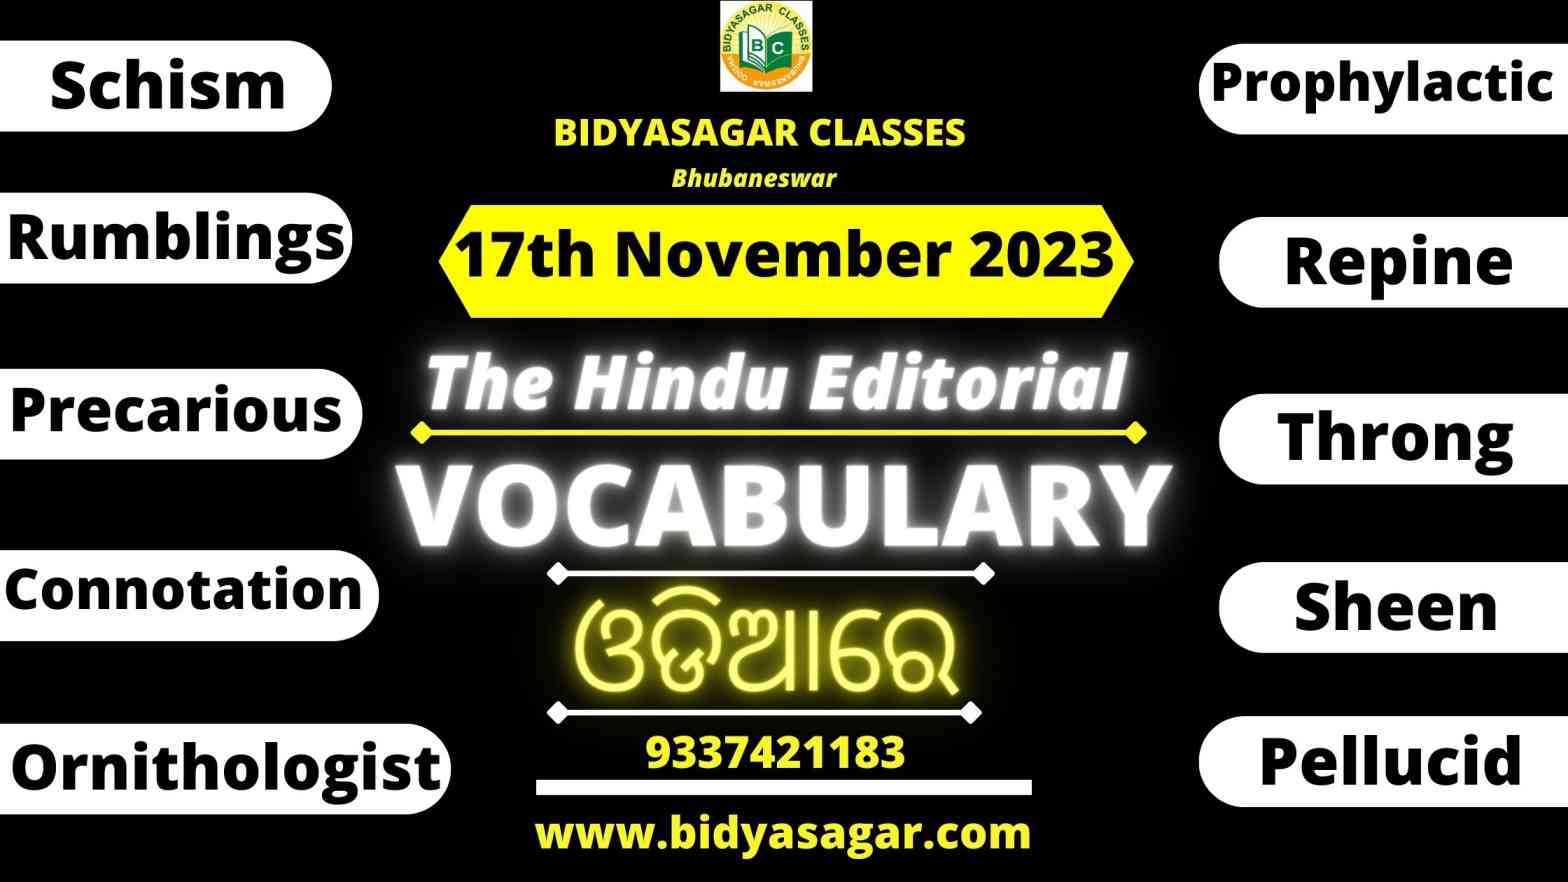 The Hindu Editorial Vocabulary of 17th November 2023